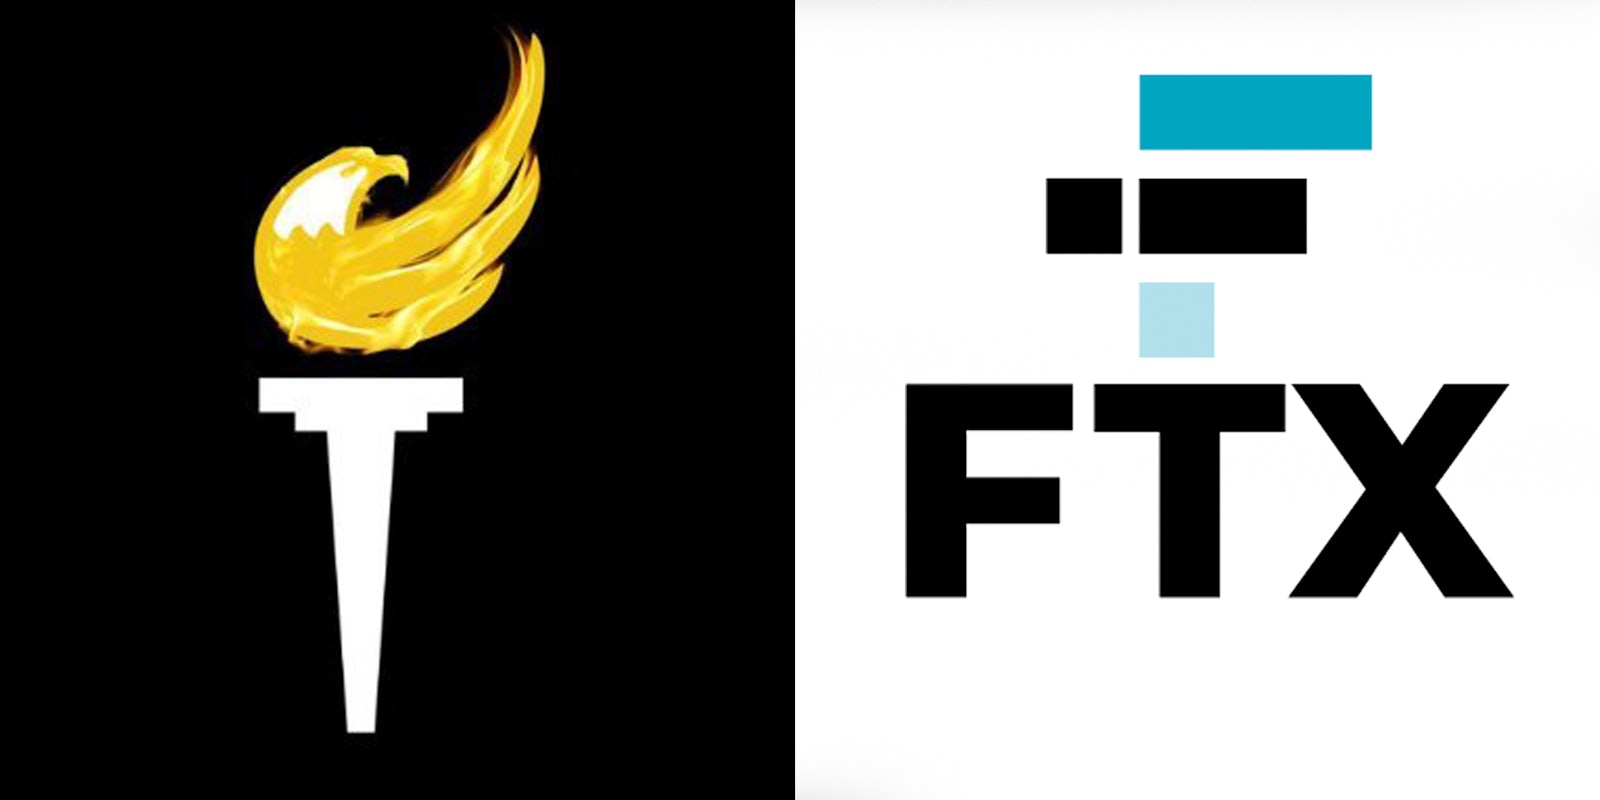 LPN logo on black background (l) FTX logo on white background (r)